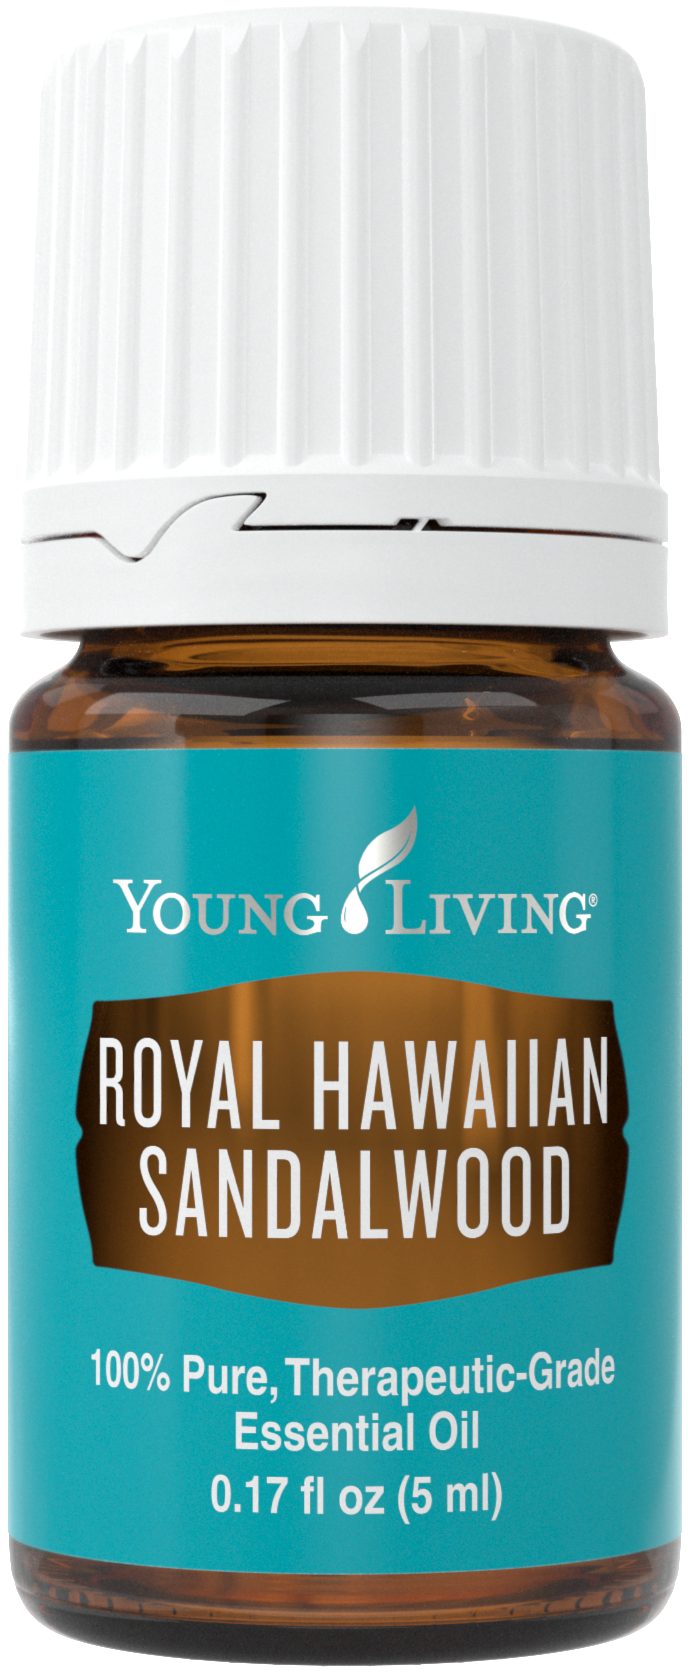 Royal Hawaiian Sandalwood essential oil | Young Living